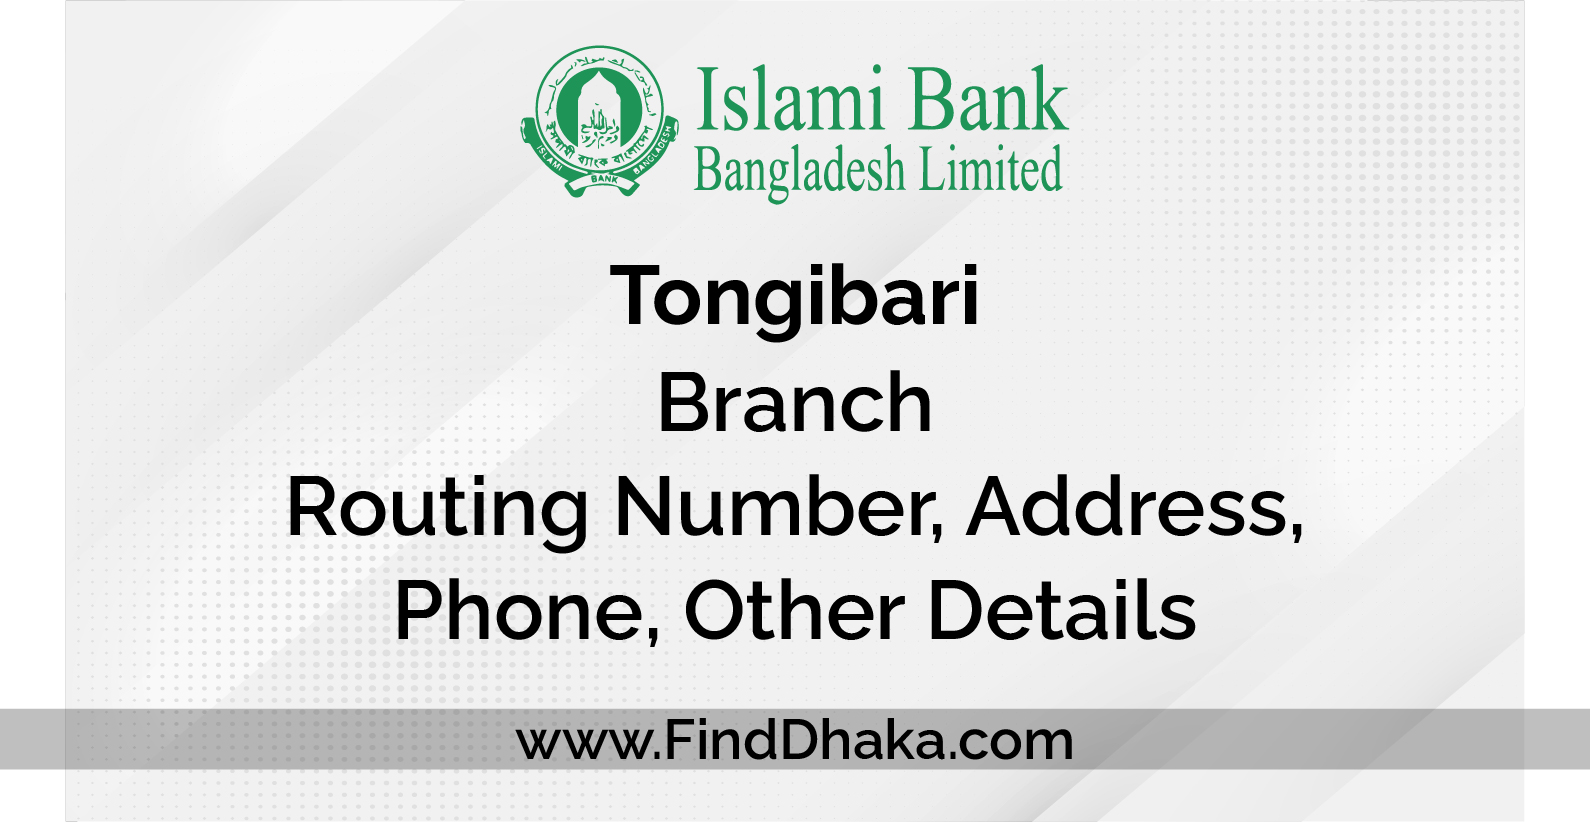 Photo of Islami Bank Tongibari Branch